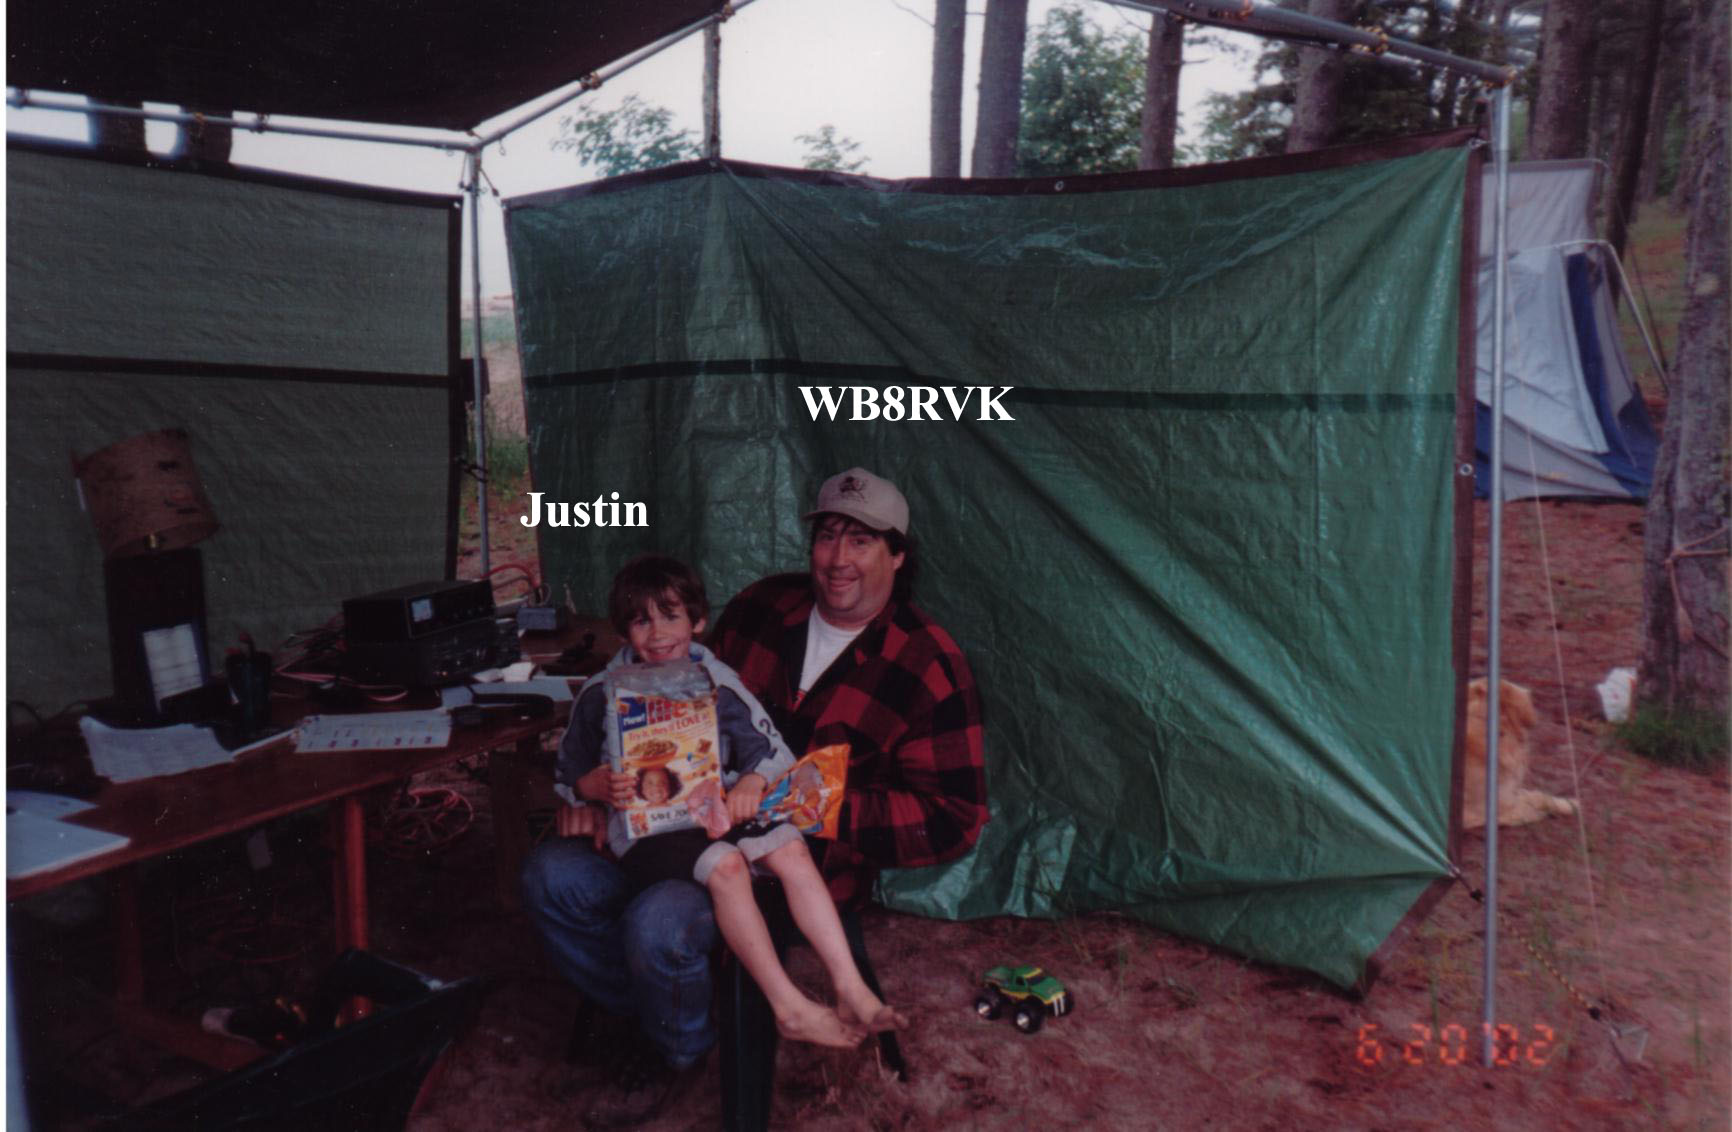 Rev WB8RVK and Justin